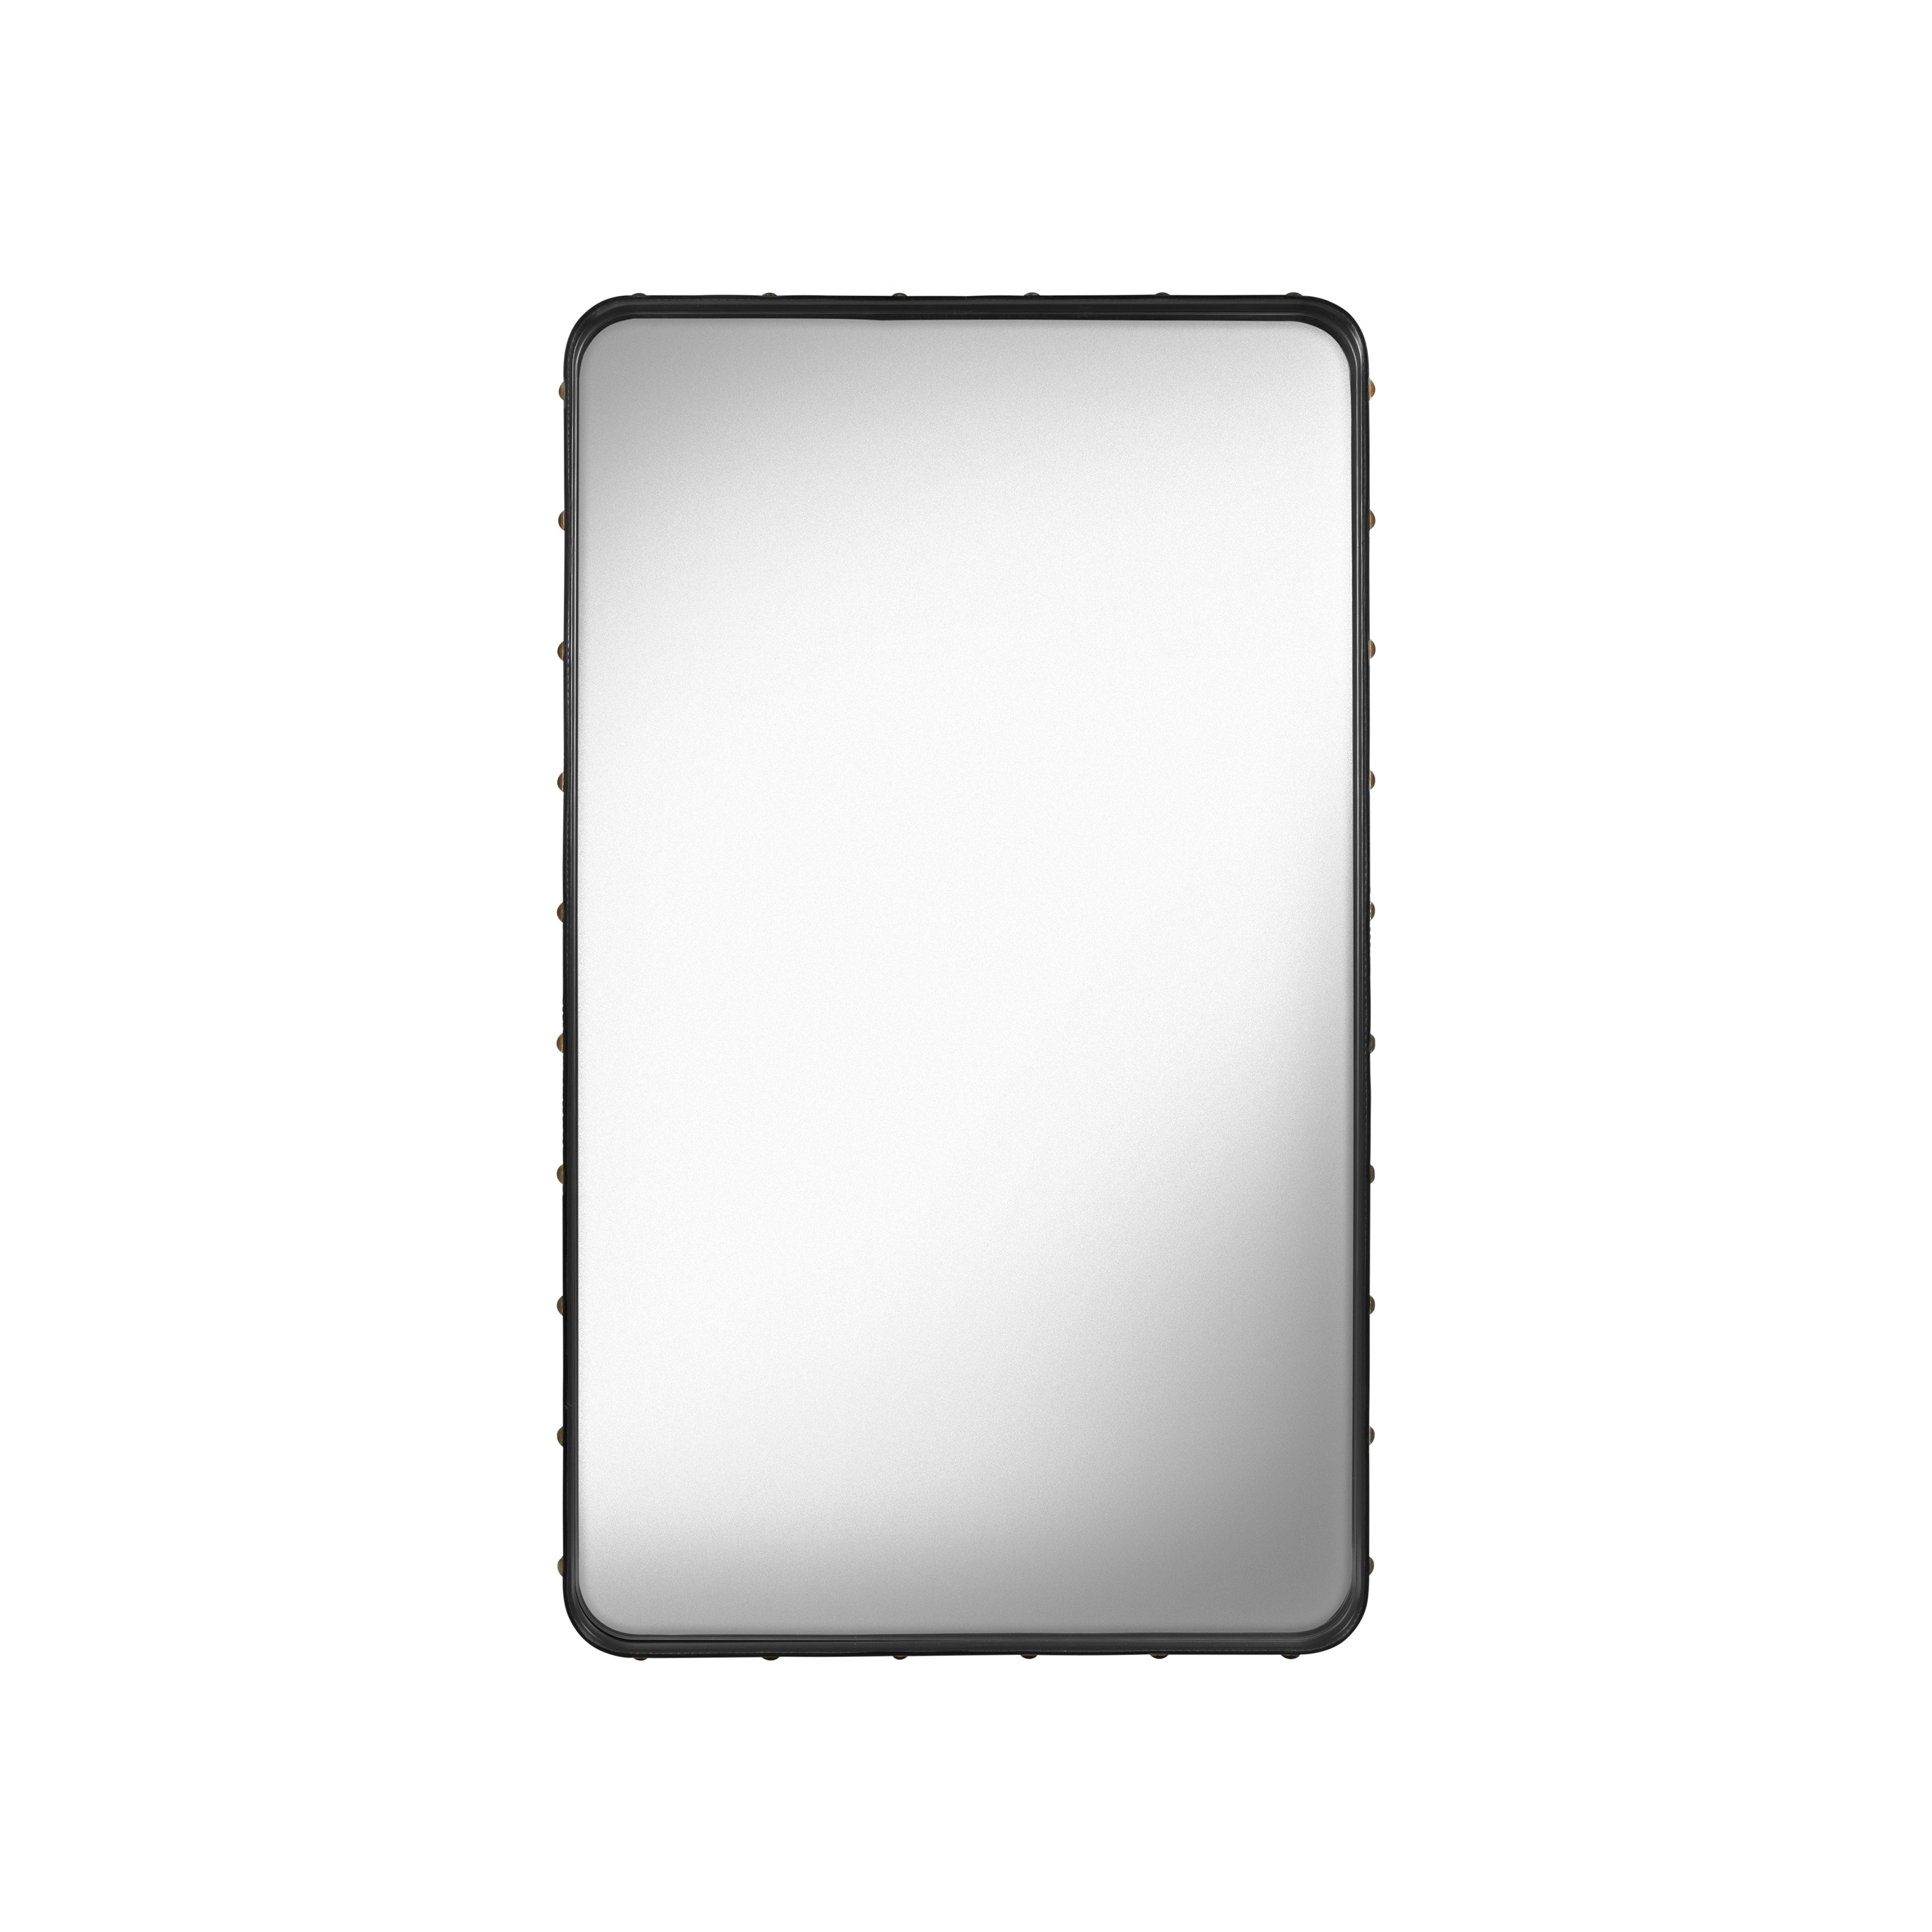 Adnet Rectangulaire Wall Mirror: Medium - 45.3